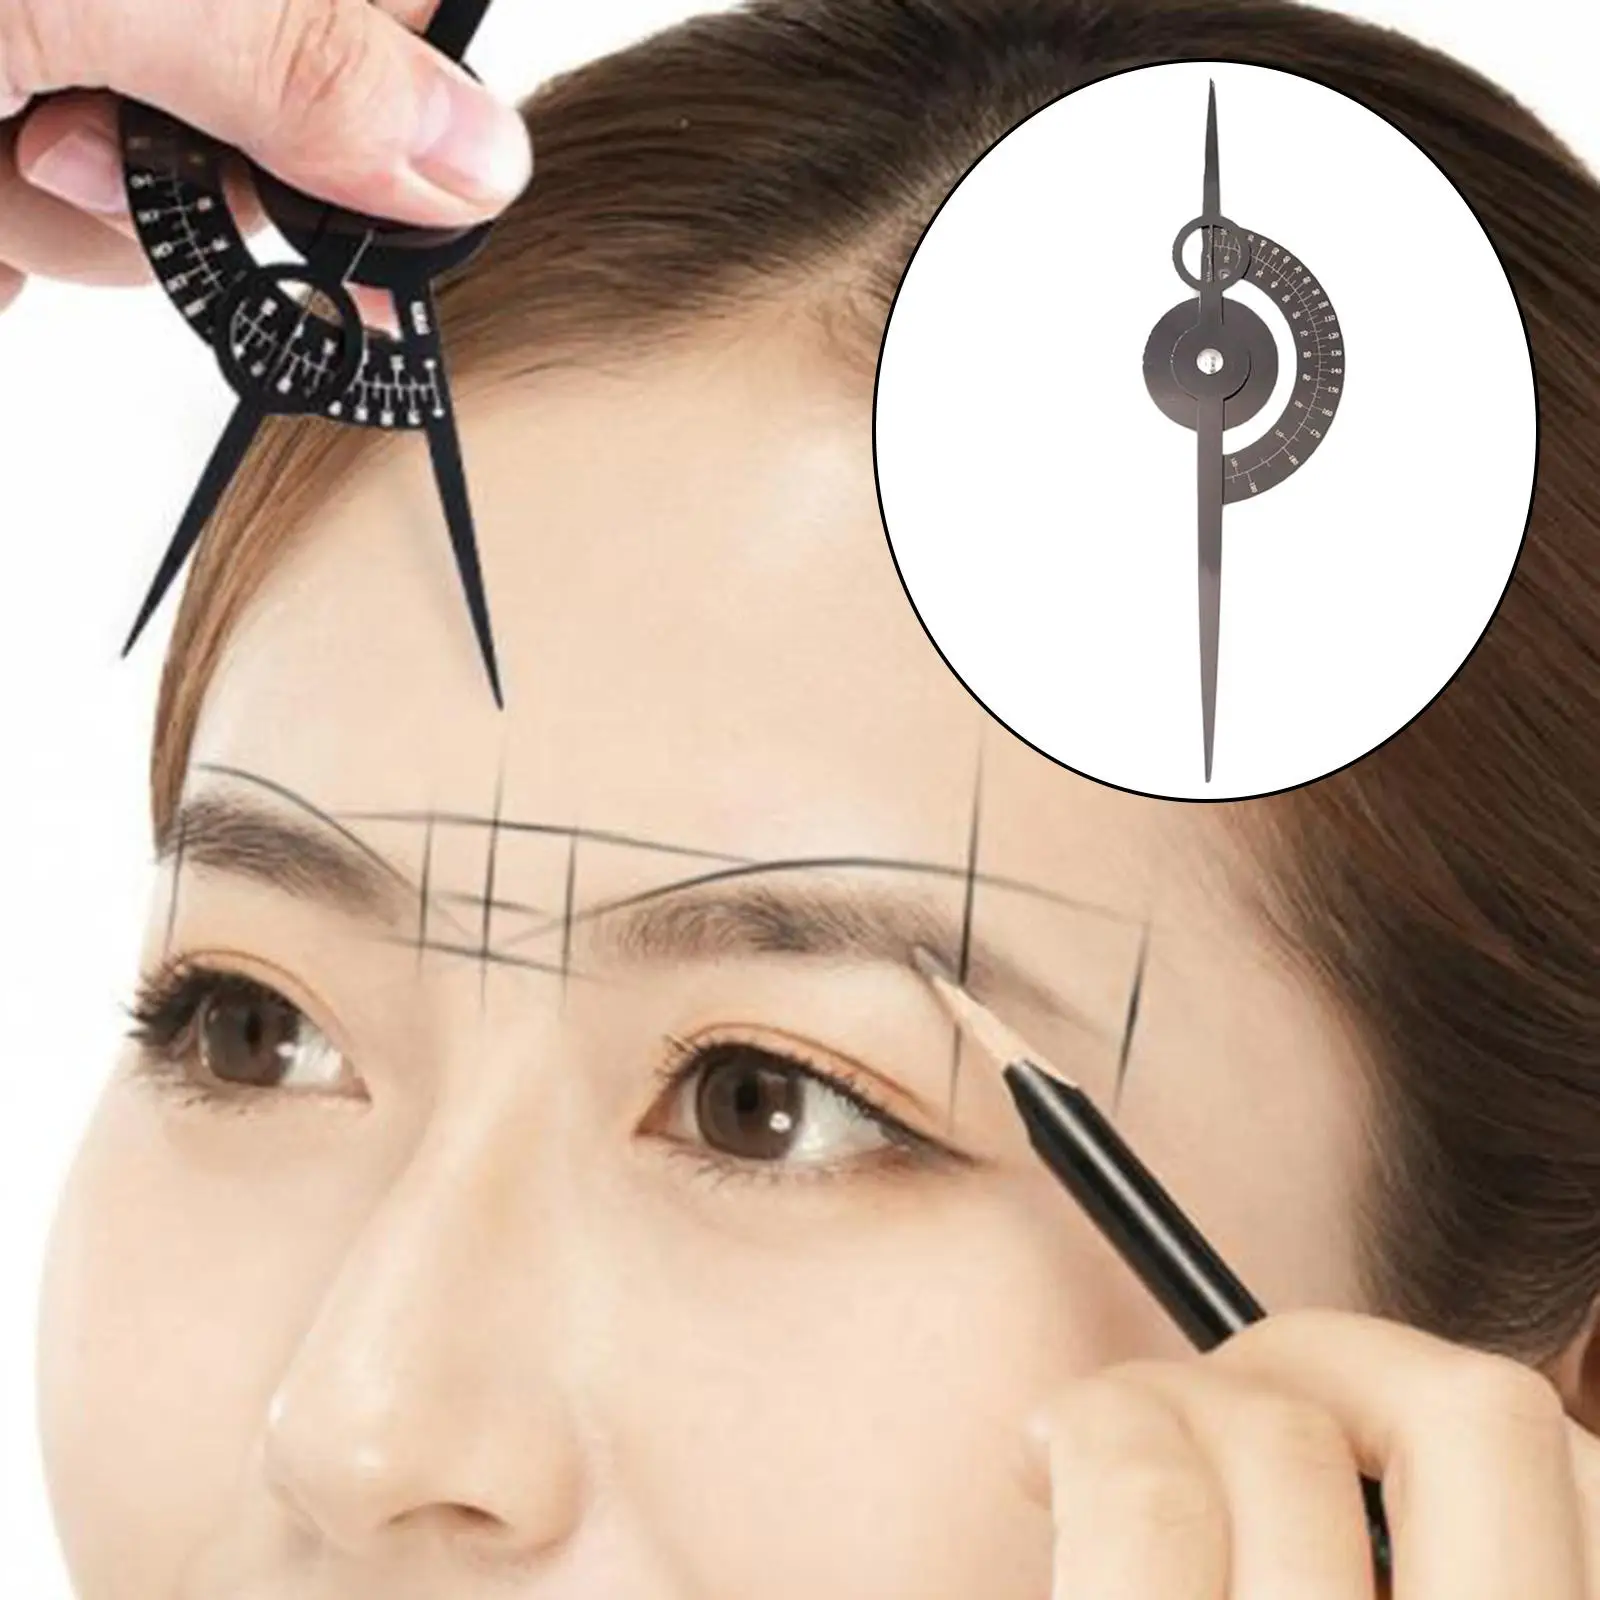  Ratio Caliper Eyebrow Stainless Steel Ruler for Permanent Makeup Shaper DIY 